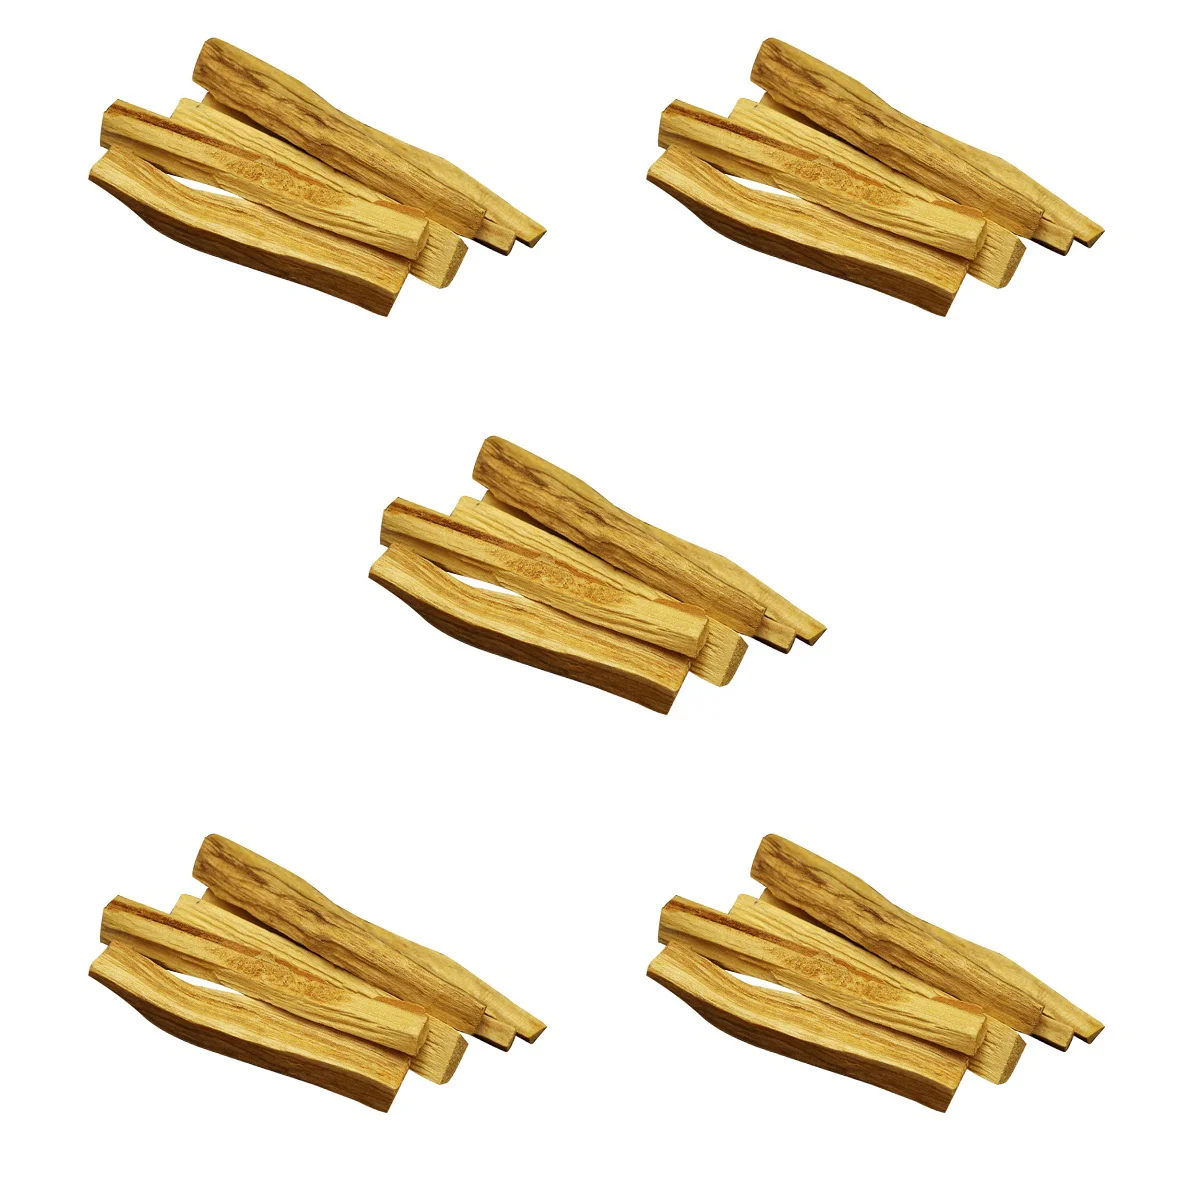 

30 Pcs Palo Santo Meditation Wood Stick Sticks Smudging Wild Harvested Sandalwood Devotional Holy